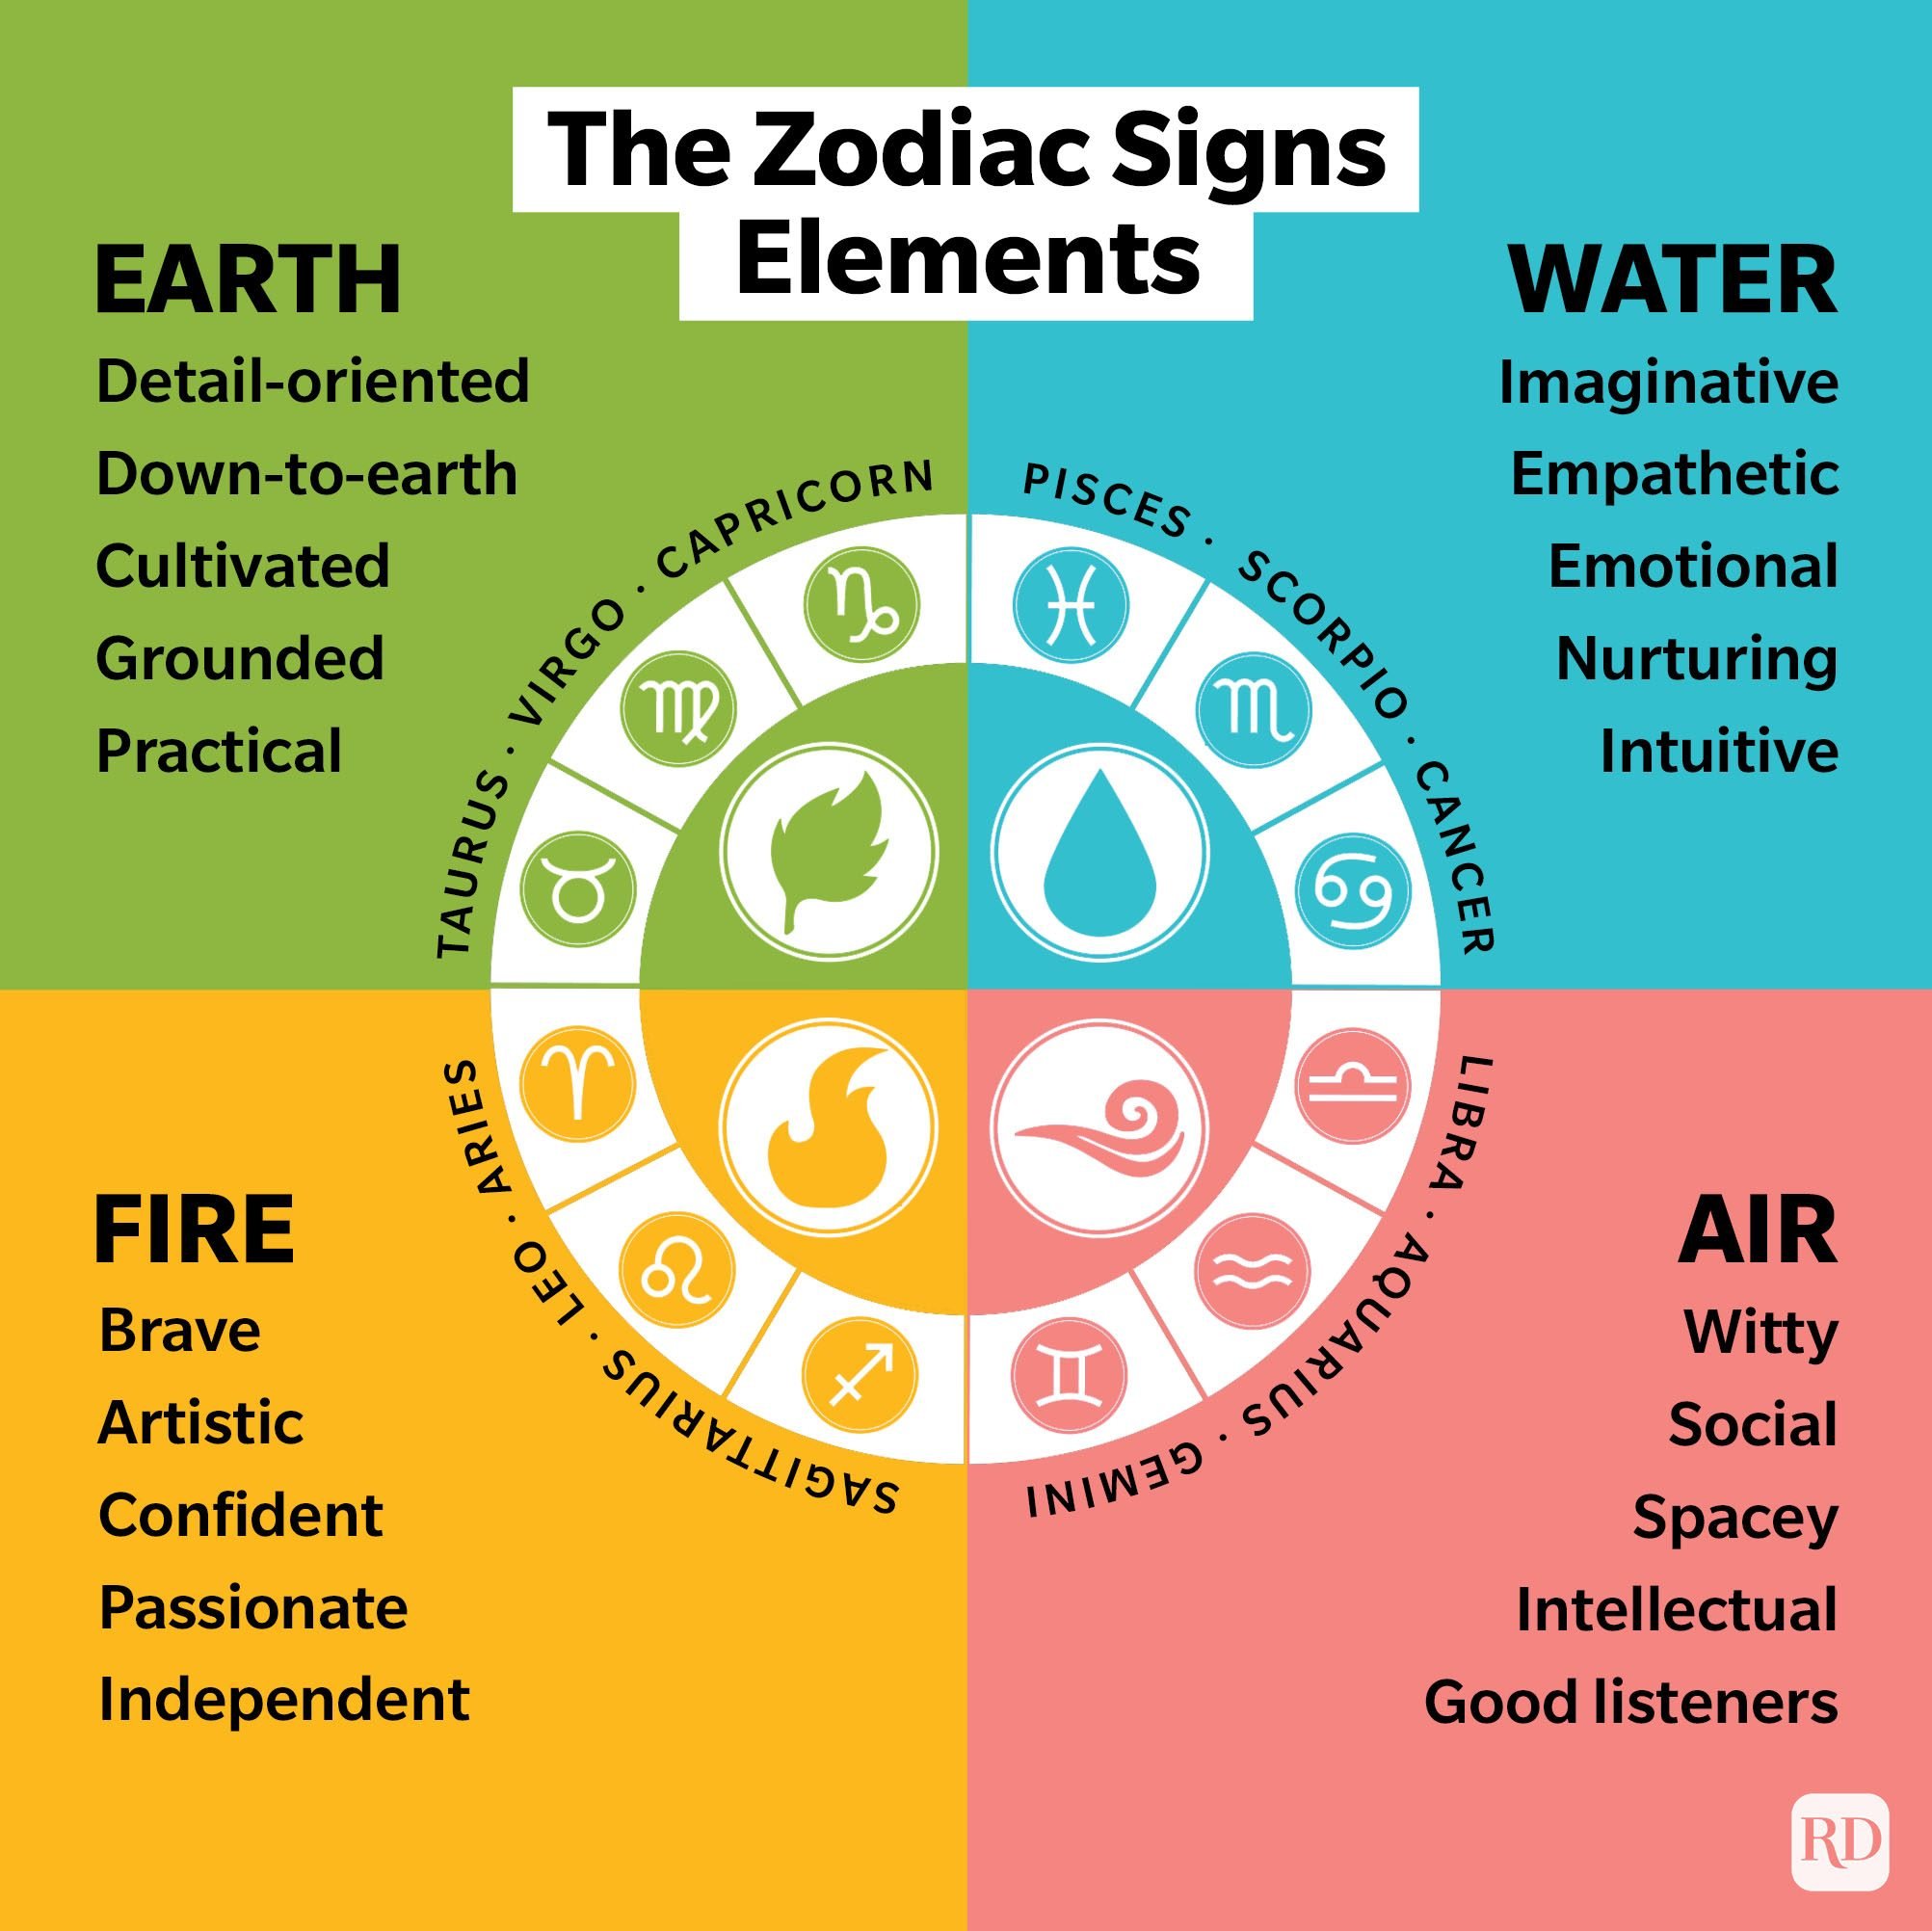 https://www.rd.com/article/zodiac-signs-elements/